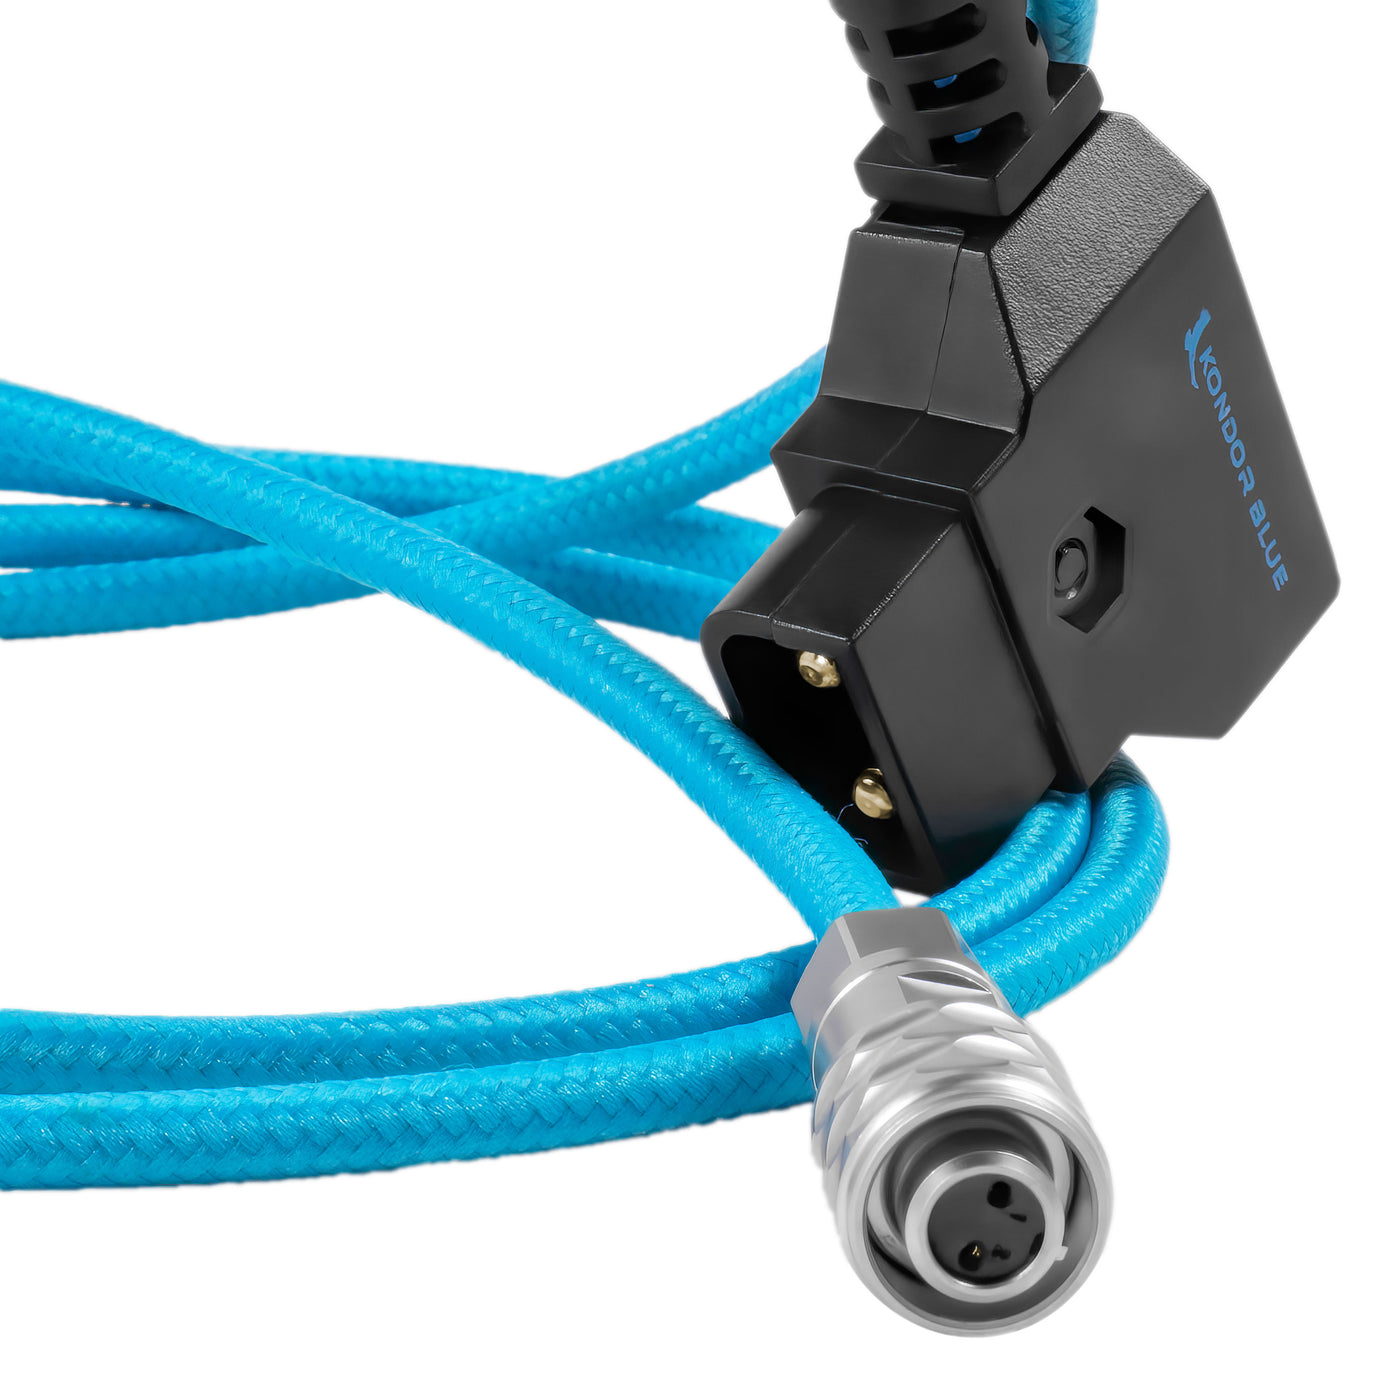 48" D-Tap to BMPCC 4K/6K Pro Power Cable for Blackmagic